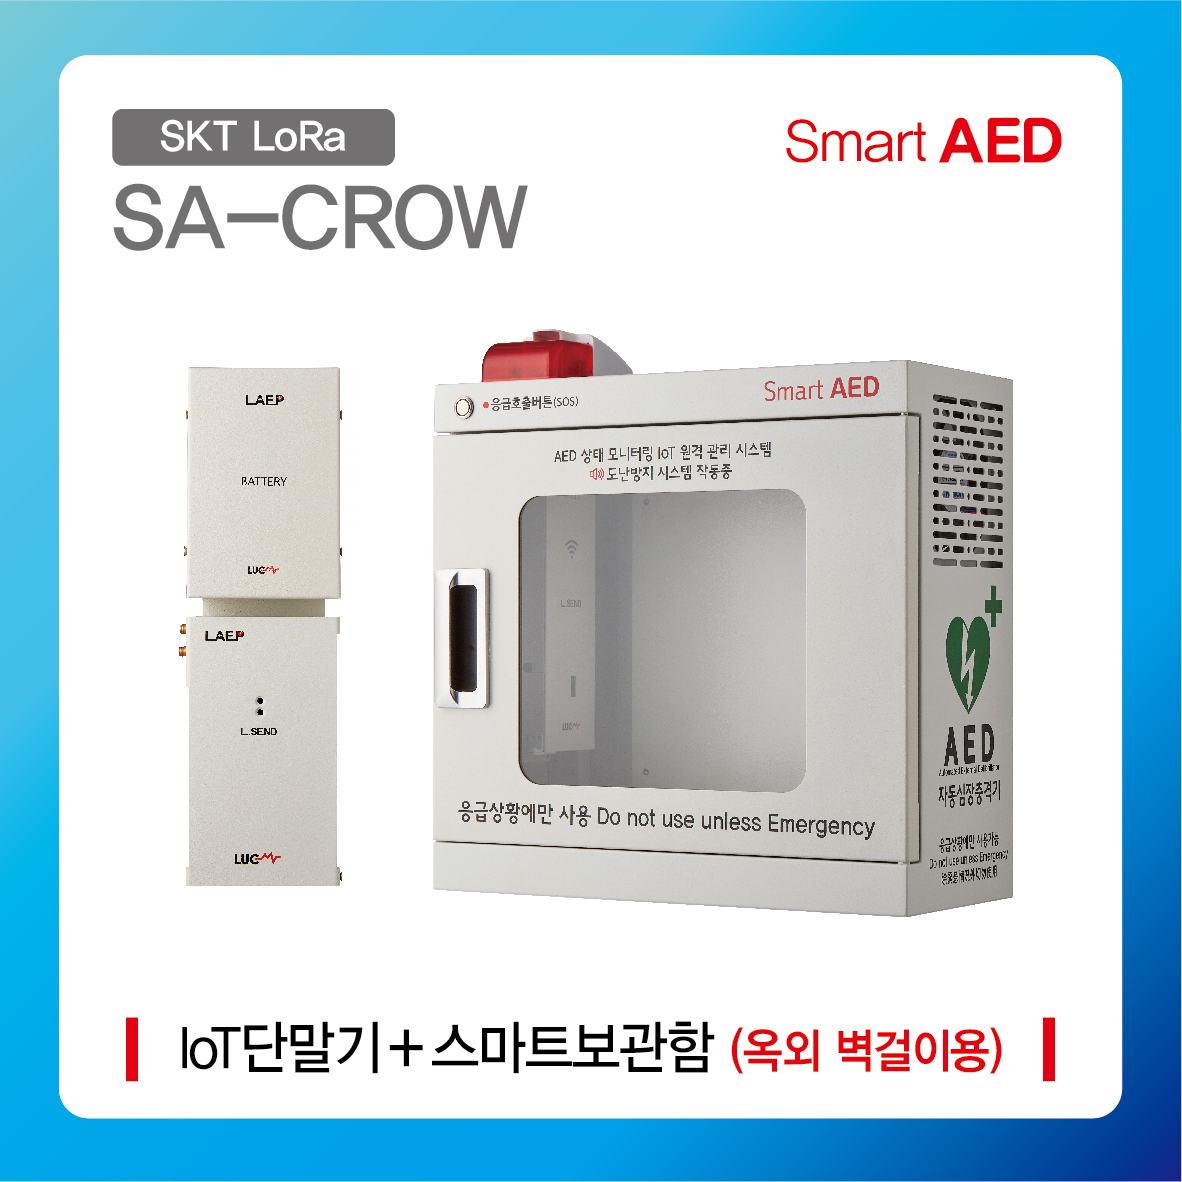 [ SA-CROW ] 스마트 AED 통합모니터링 장치 및 플랫폼